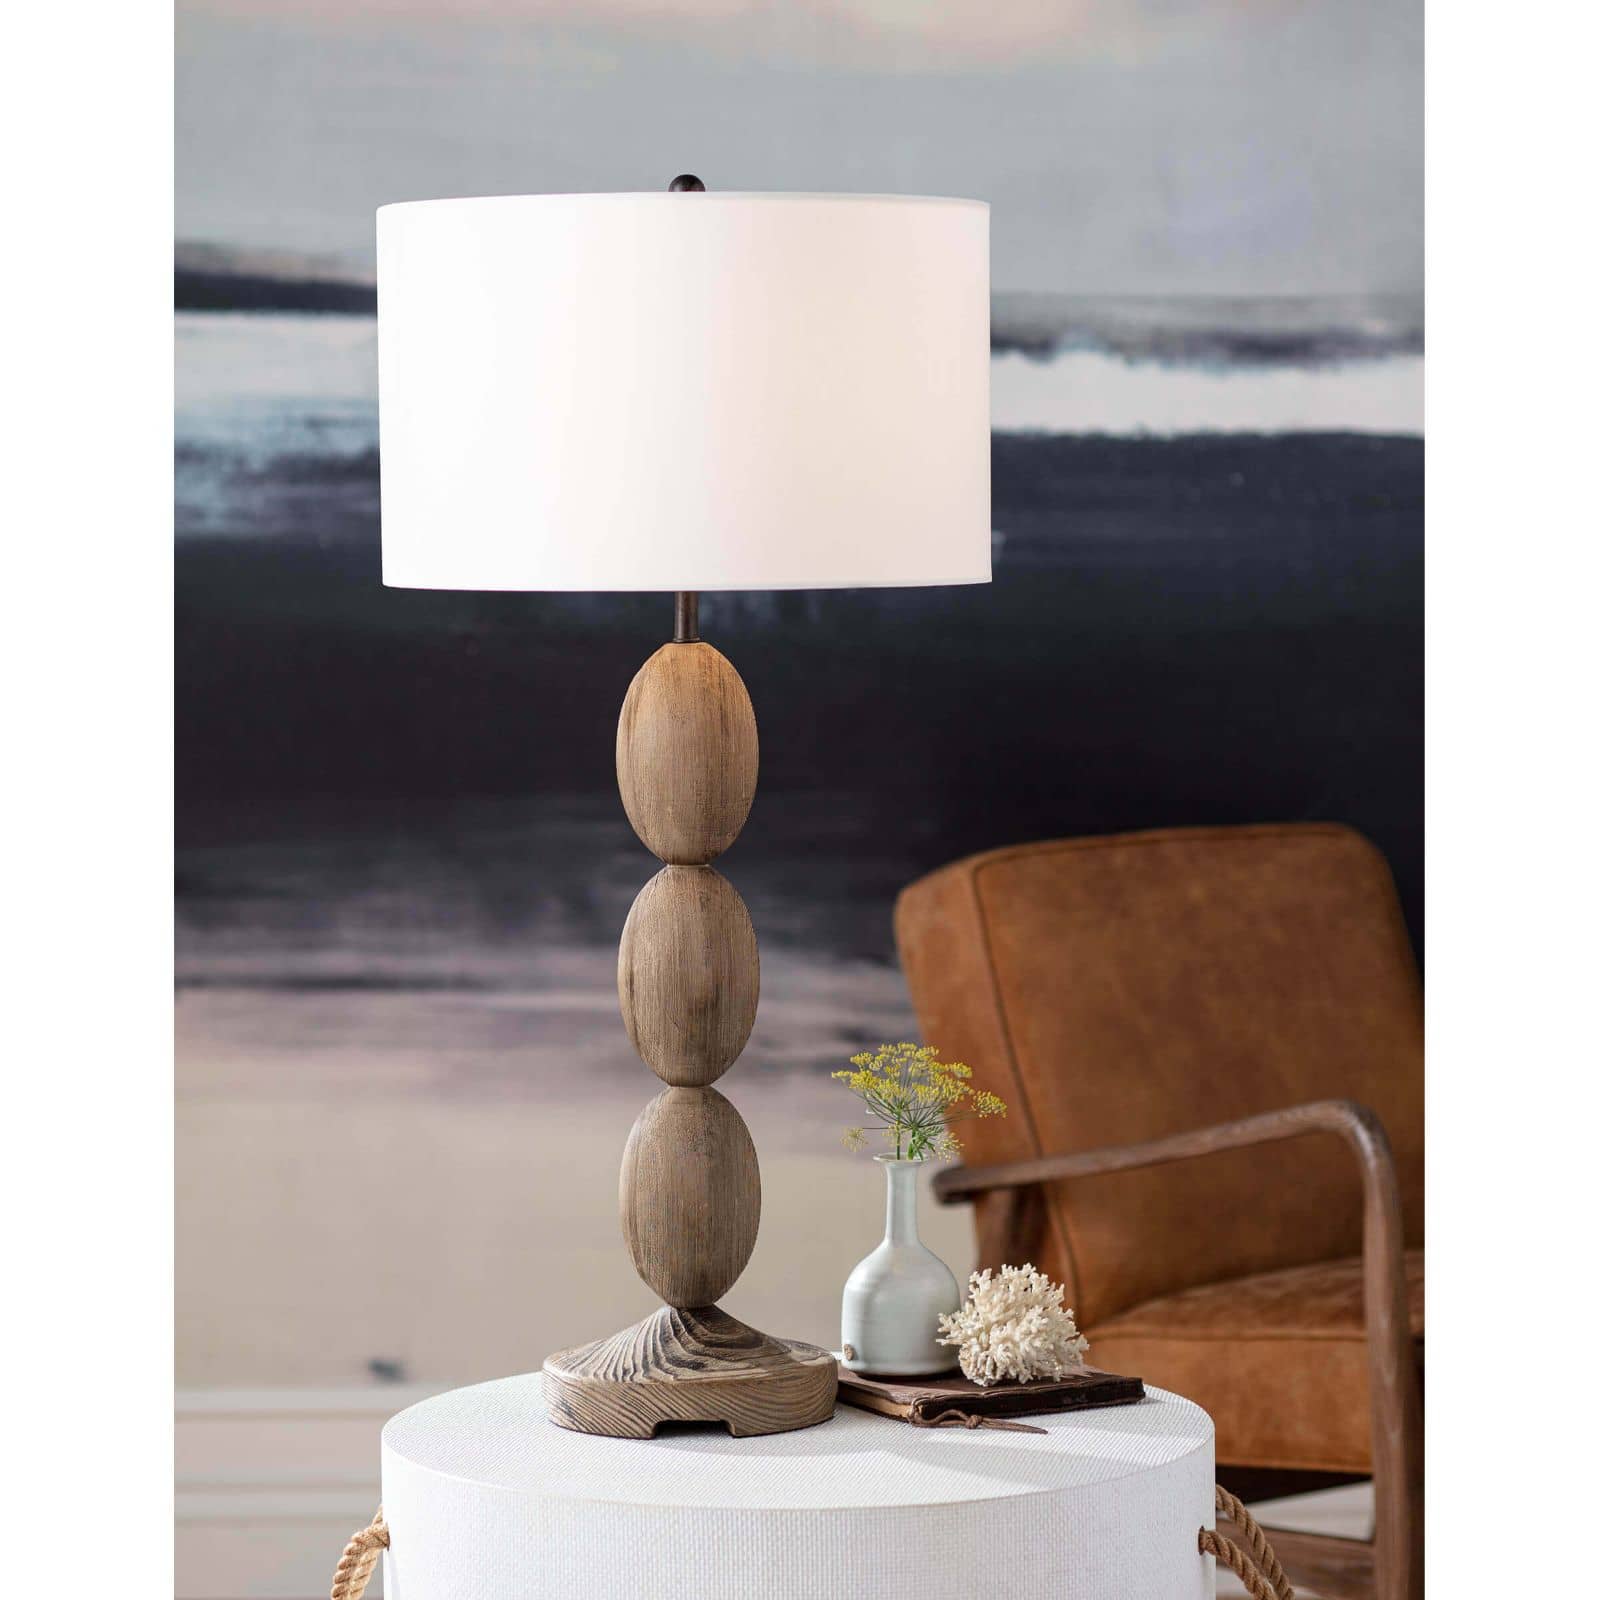 Buoy Table Lamp by Coastal Living